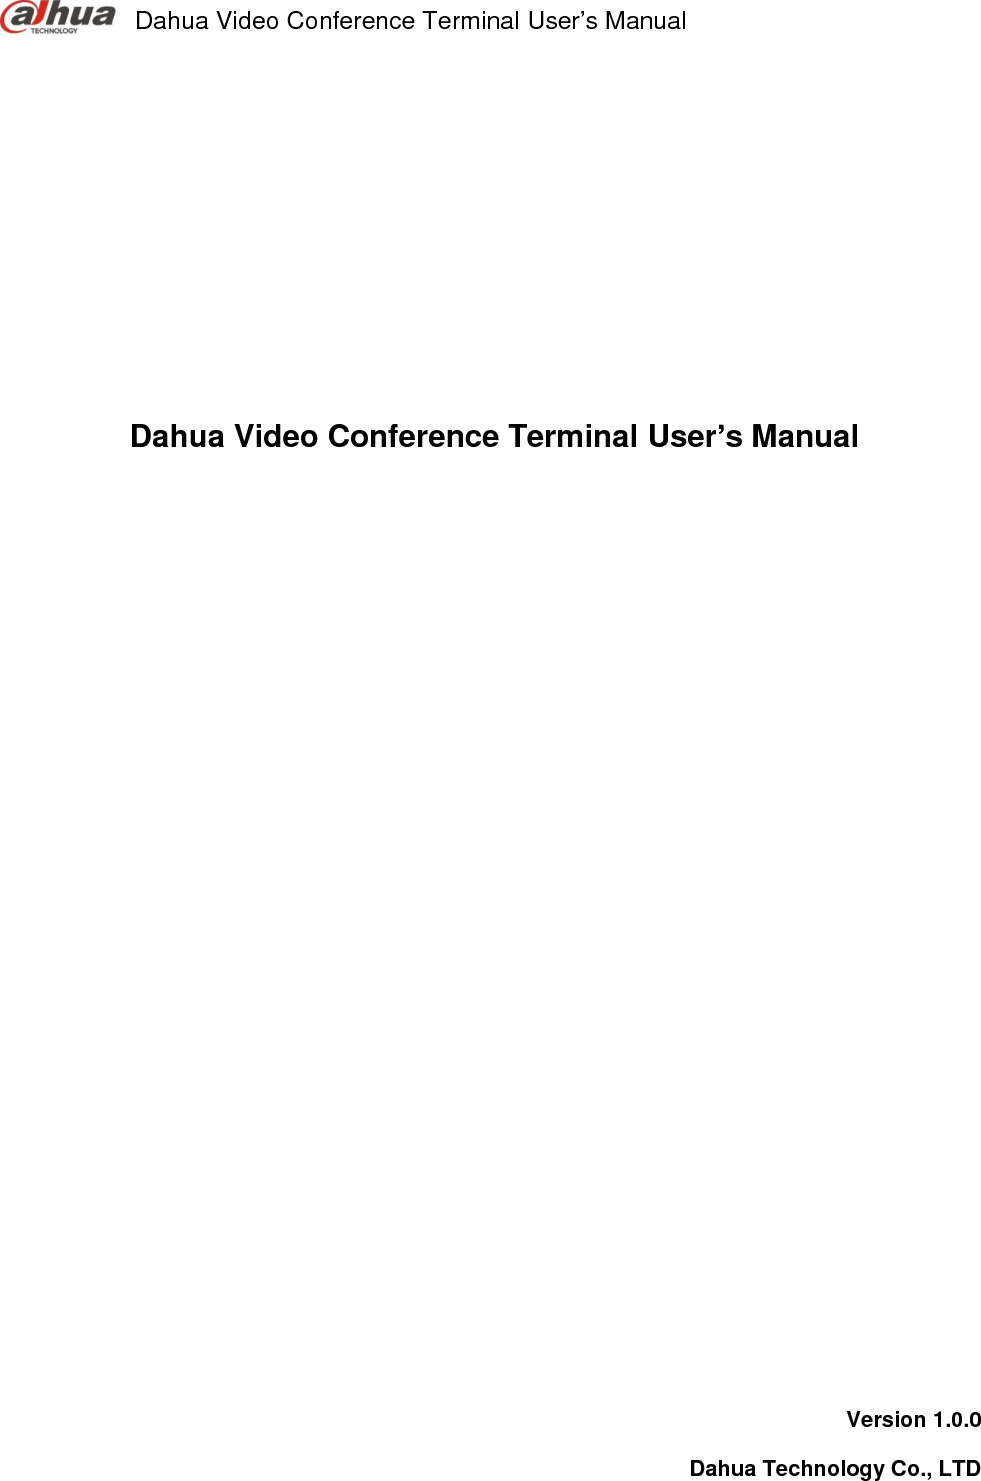  Dahua Video Conference Terminal User’s Manual        Dahua Video Conference Terminal User’s Manual                       Version 1.0.0 Dahua Technology Co., LTD 